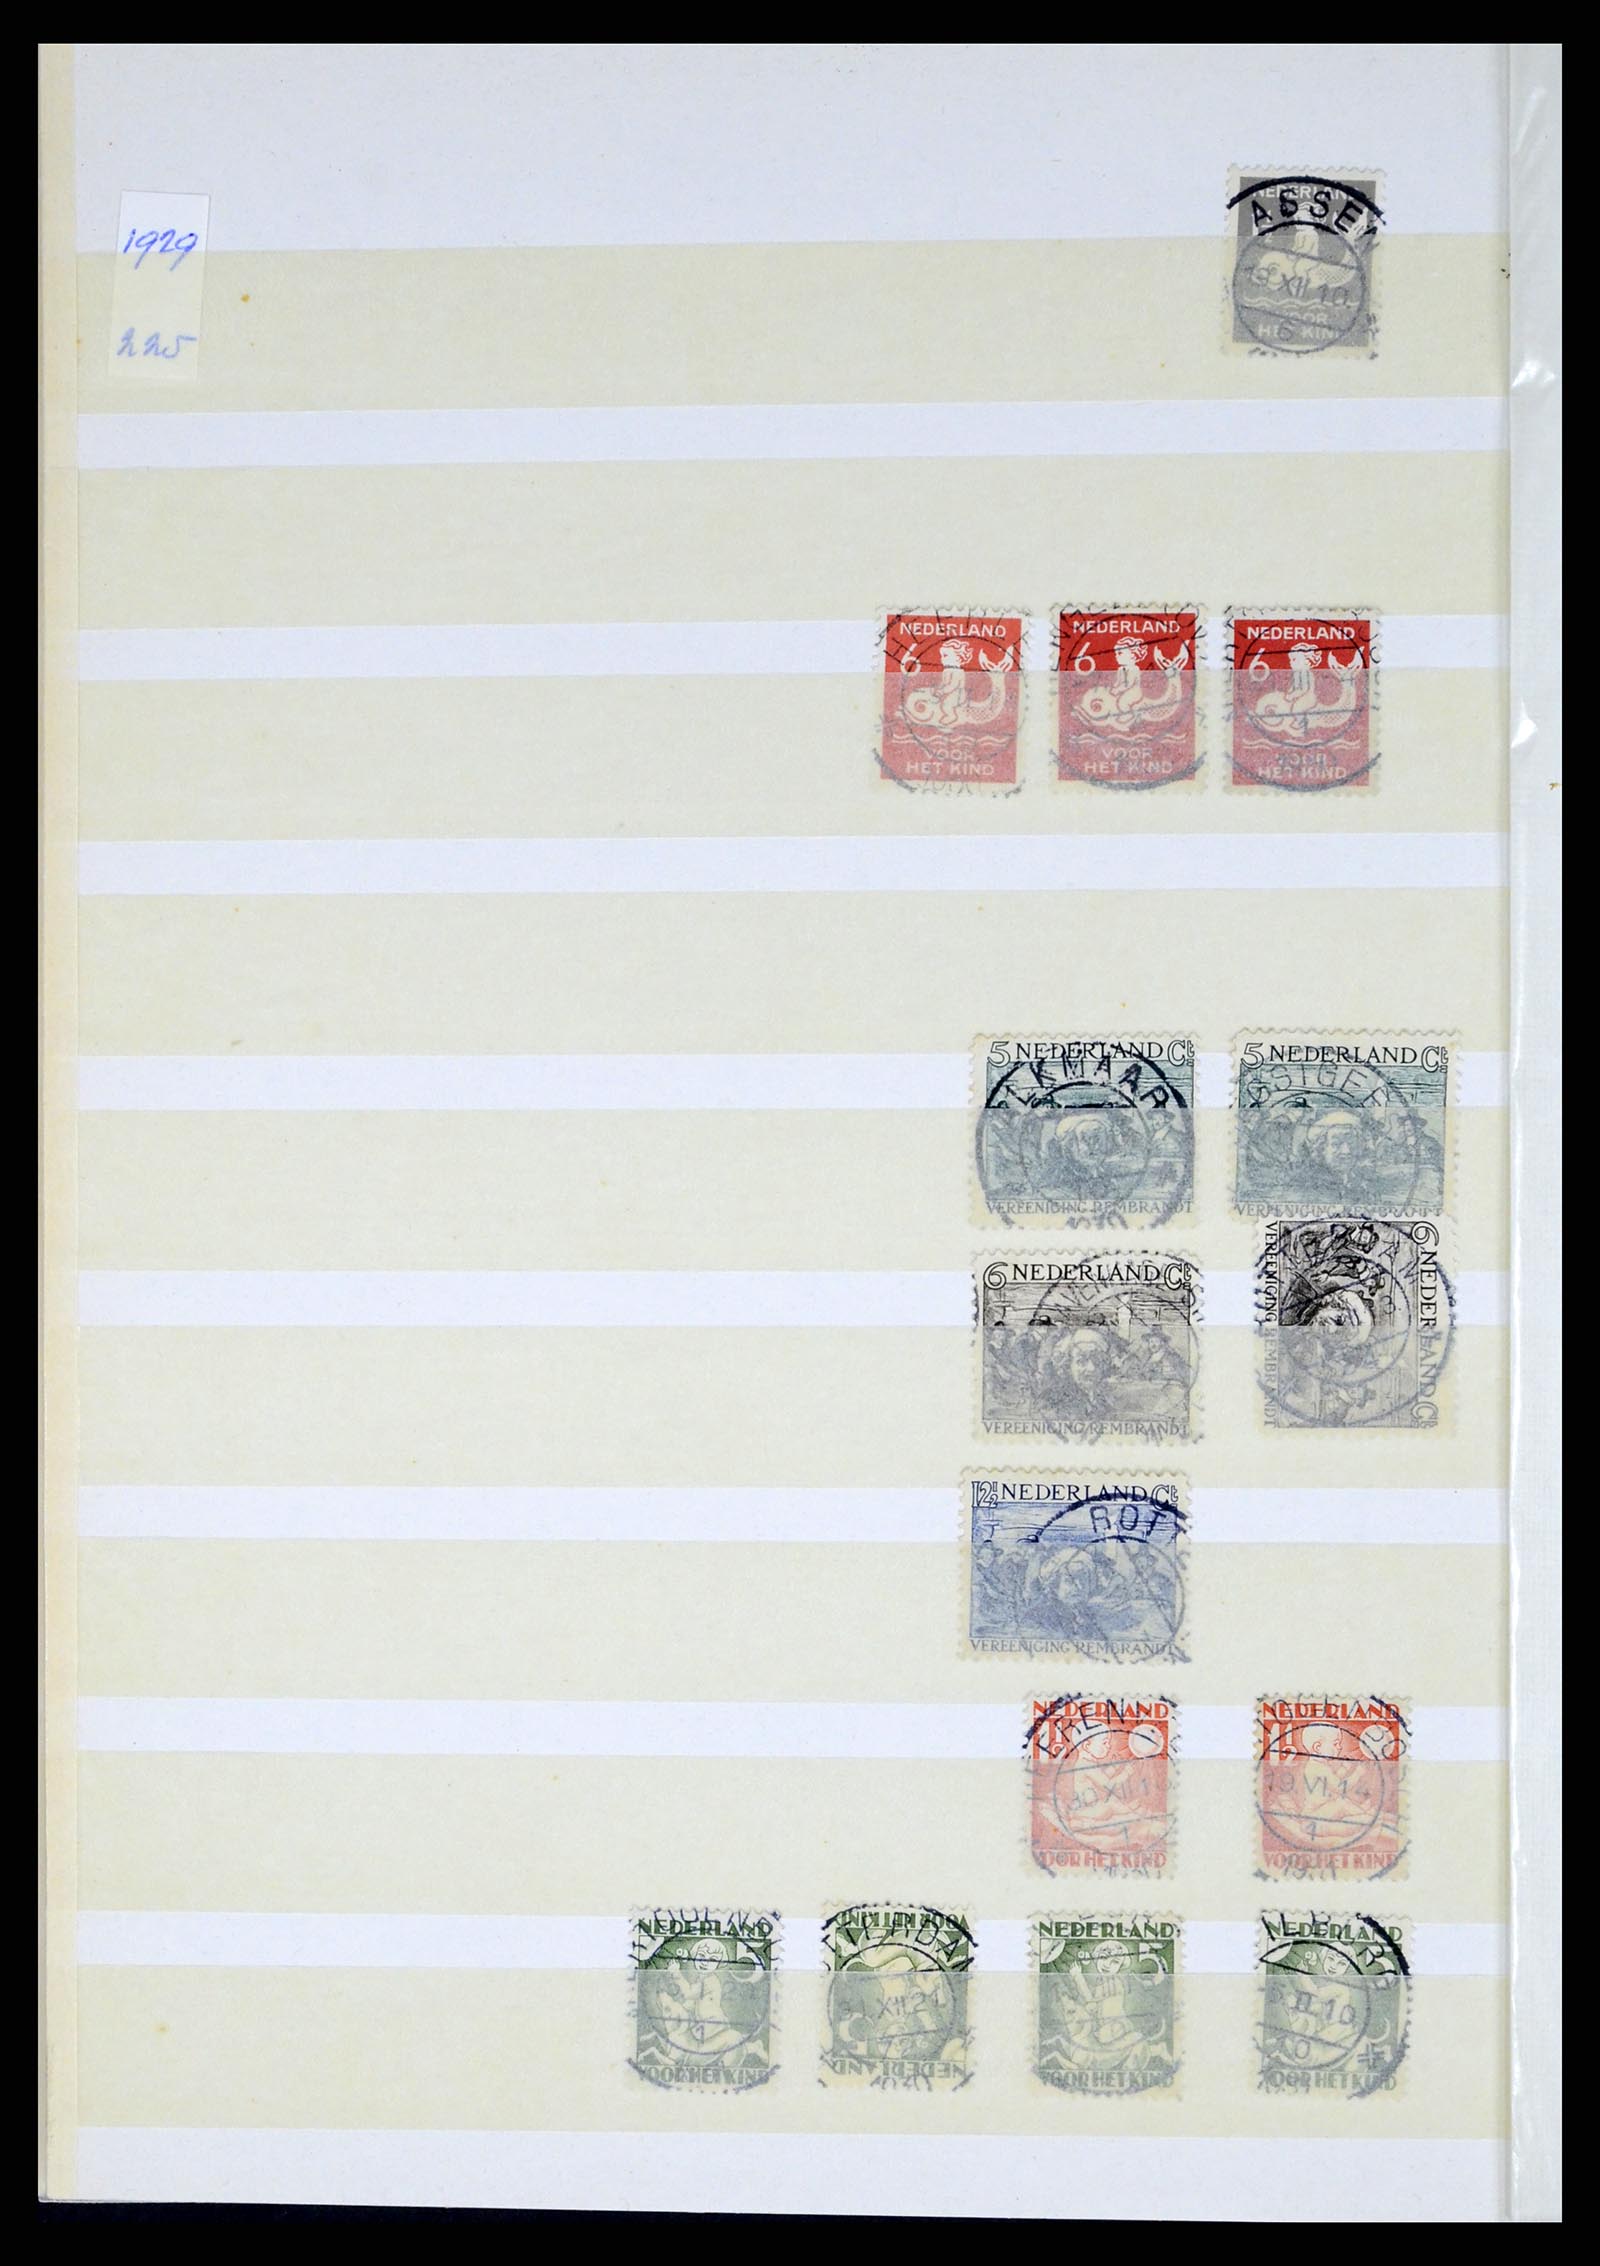 37424 014 - Stamp collection 37424 Netherlands shortbar cancels.